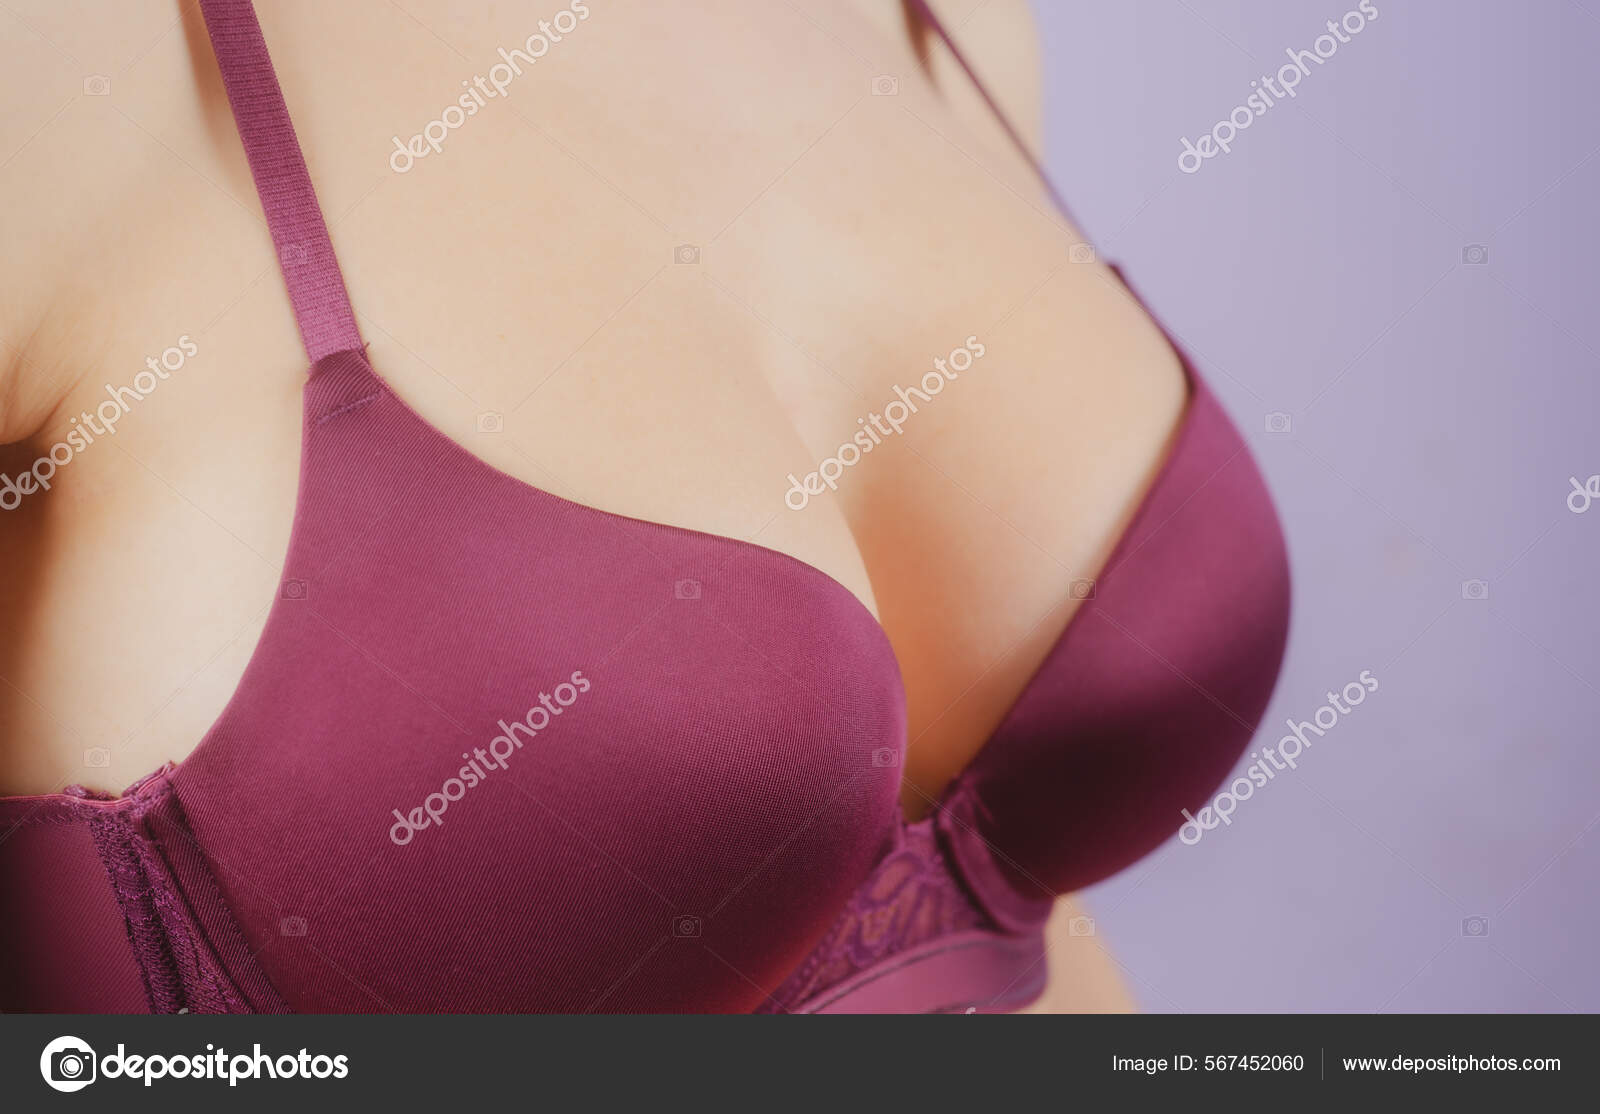 https://st.depositphotos.com/3584053/56745/i/1600/depositphotos_567452060-stock-photo-sexy-woman-breast-in-bra.jpg